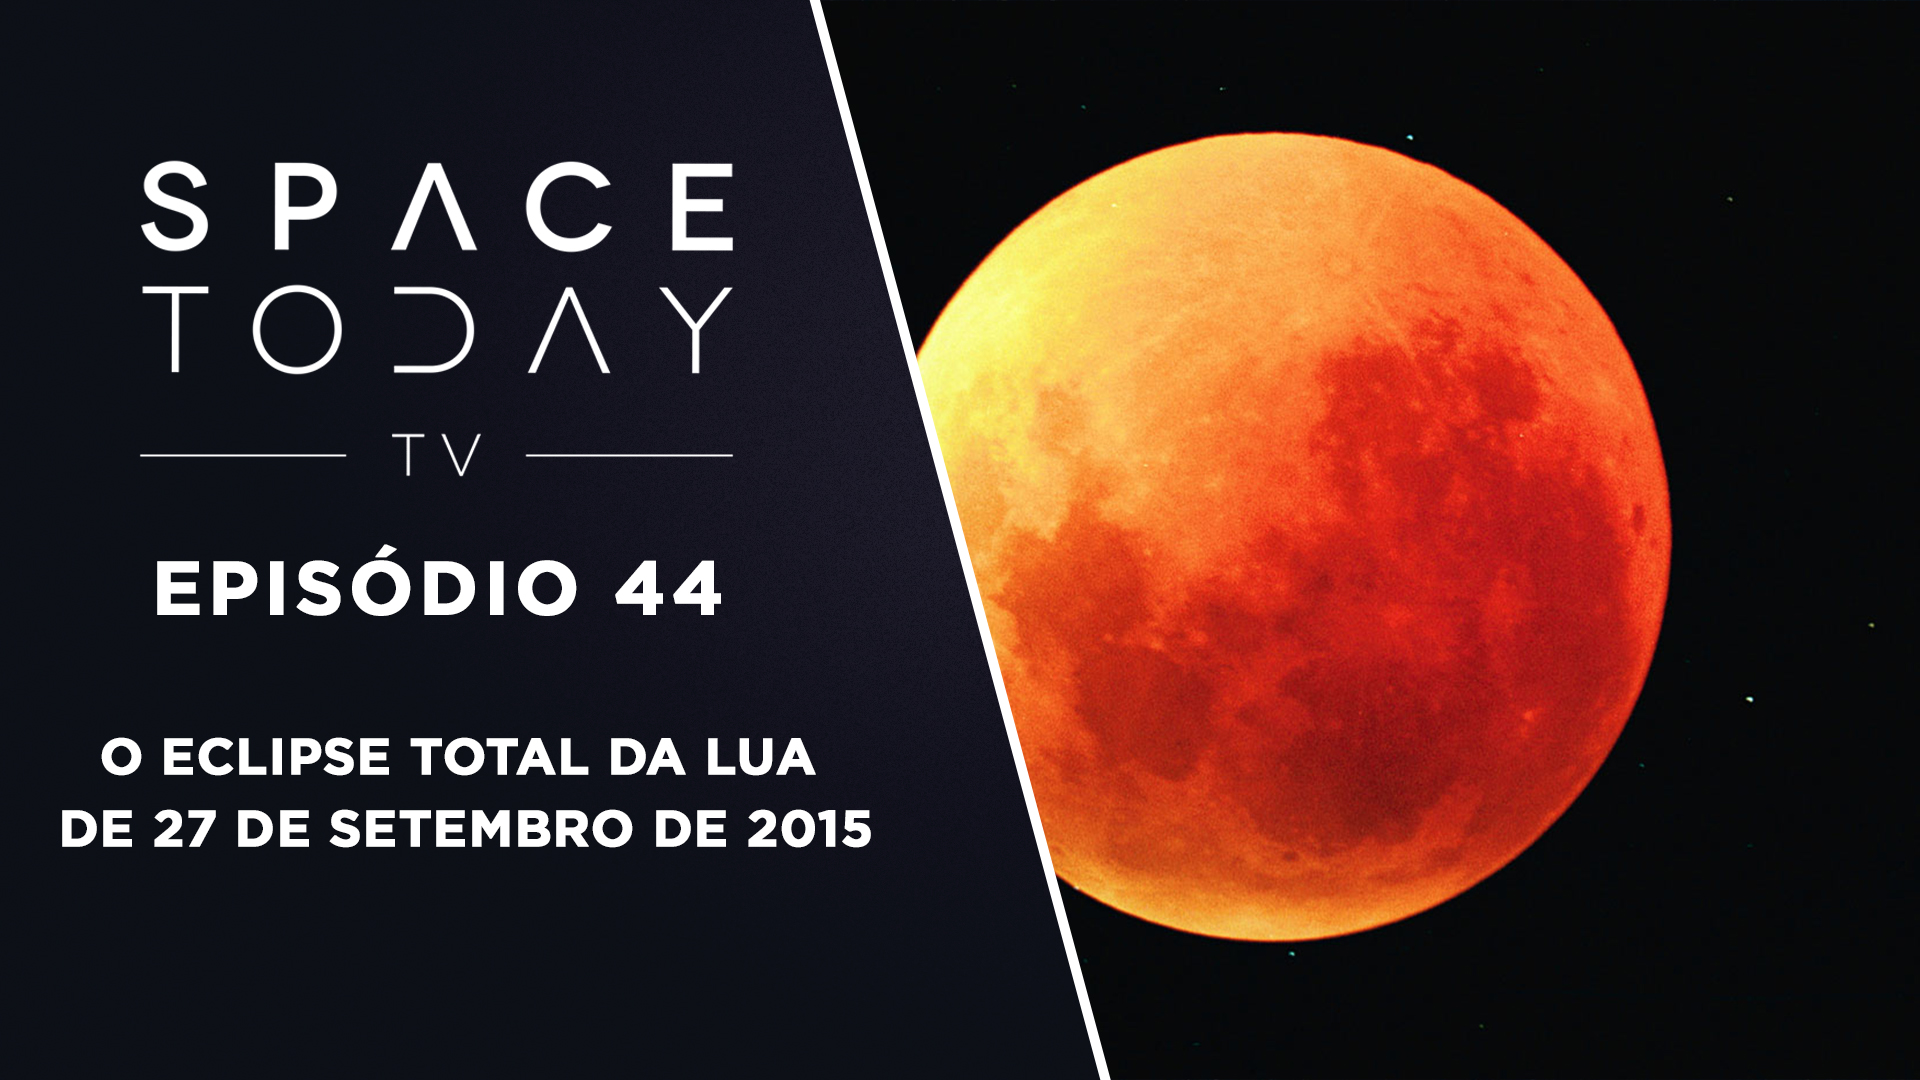 Vídeo Explica Tudo Sobre o Eclipse Total da Lua de 27 de Setembro de 2015